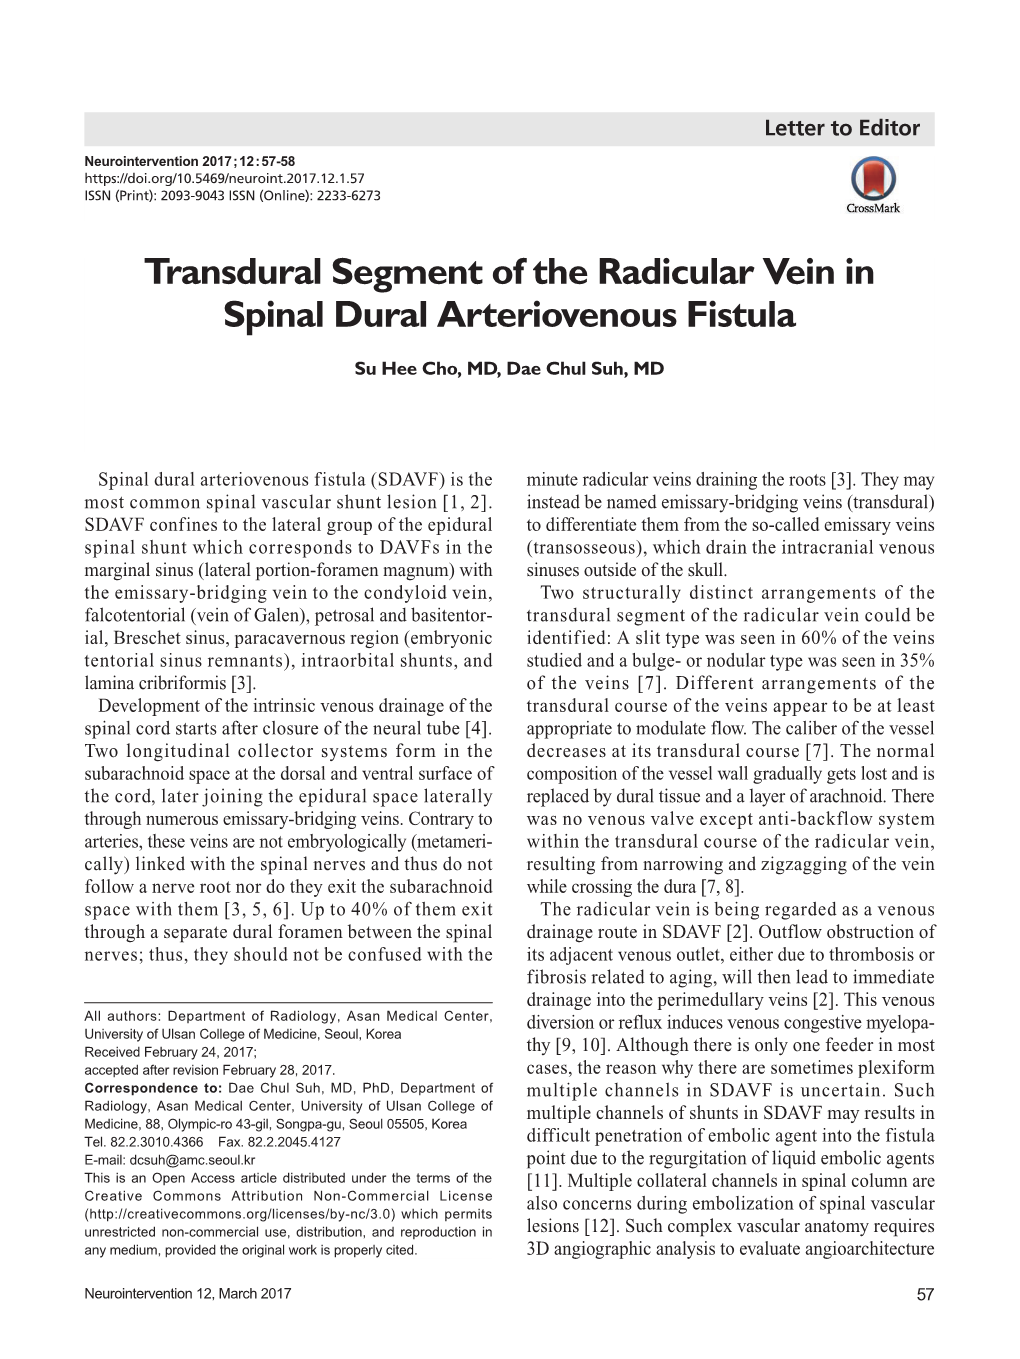 Transdural Segment of the Radicular Vein in Spinal Dural Arteriovenous Fistula